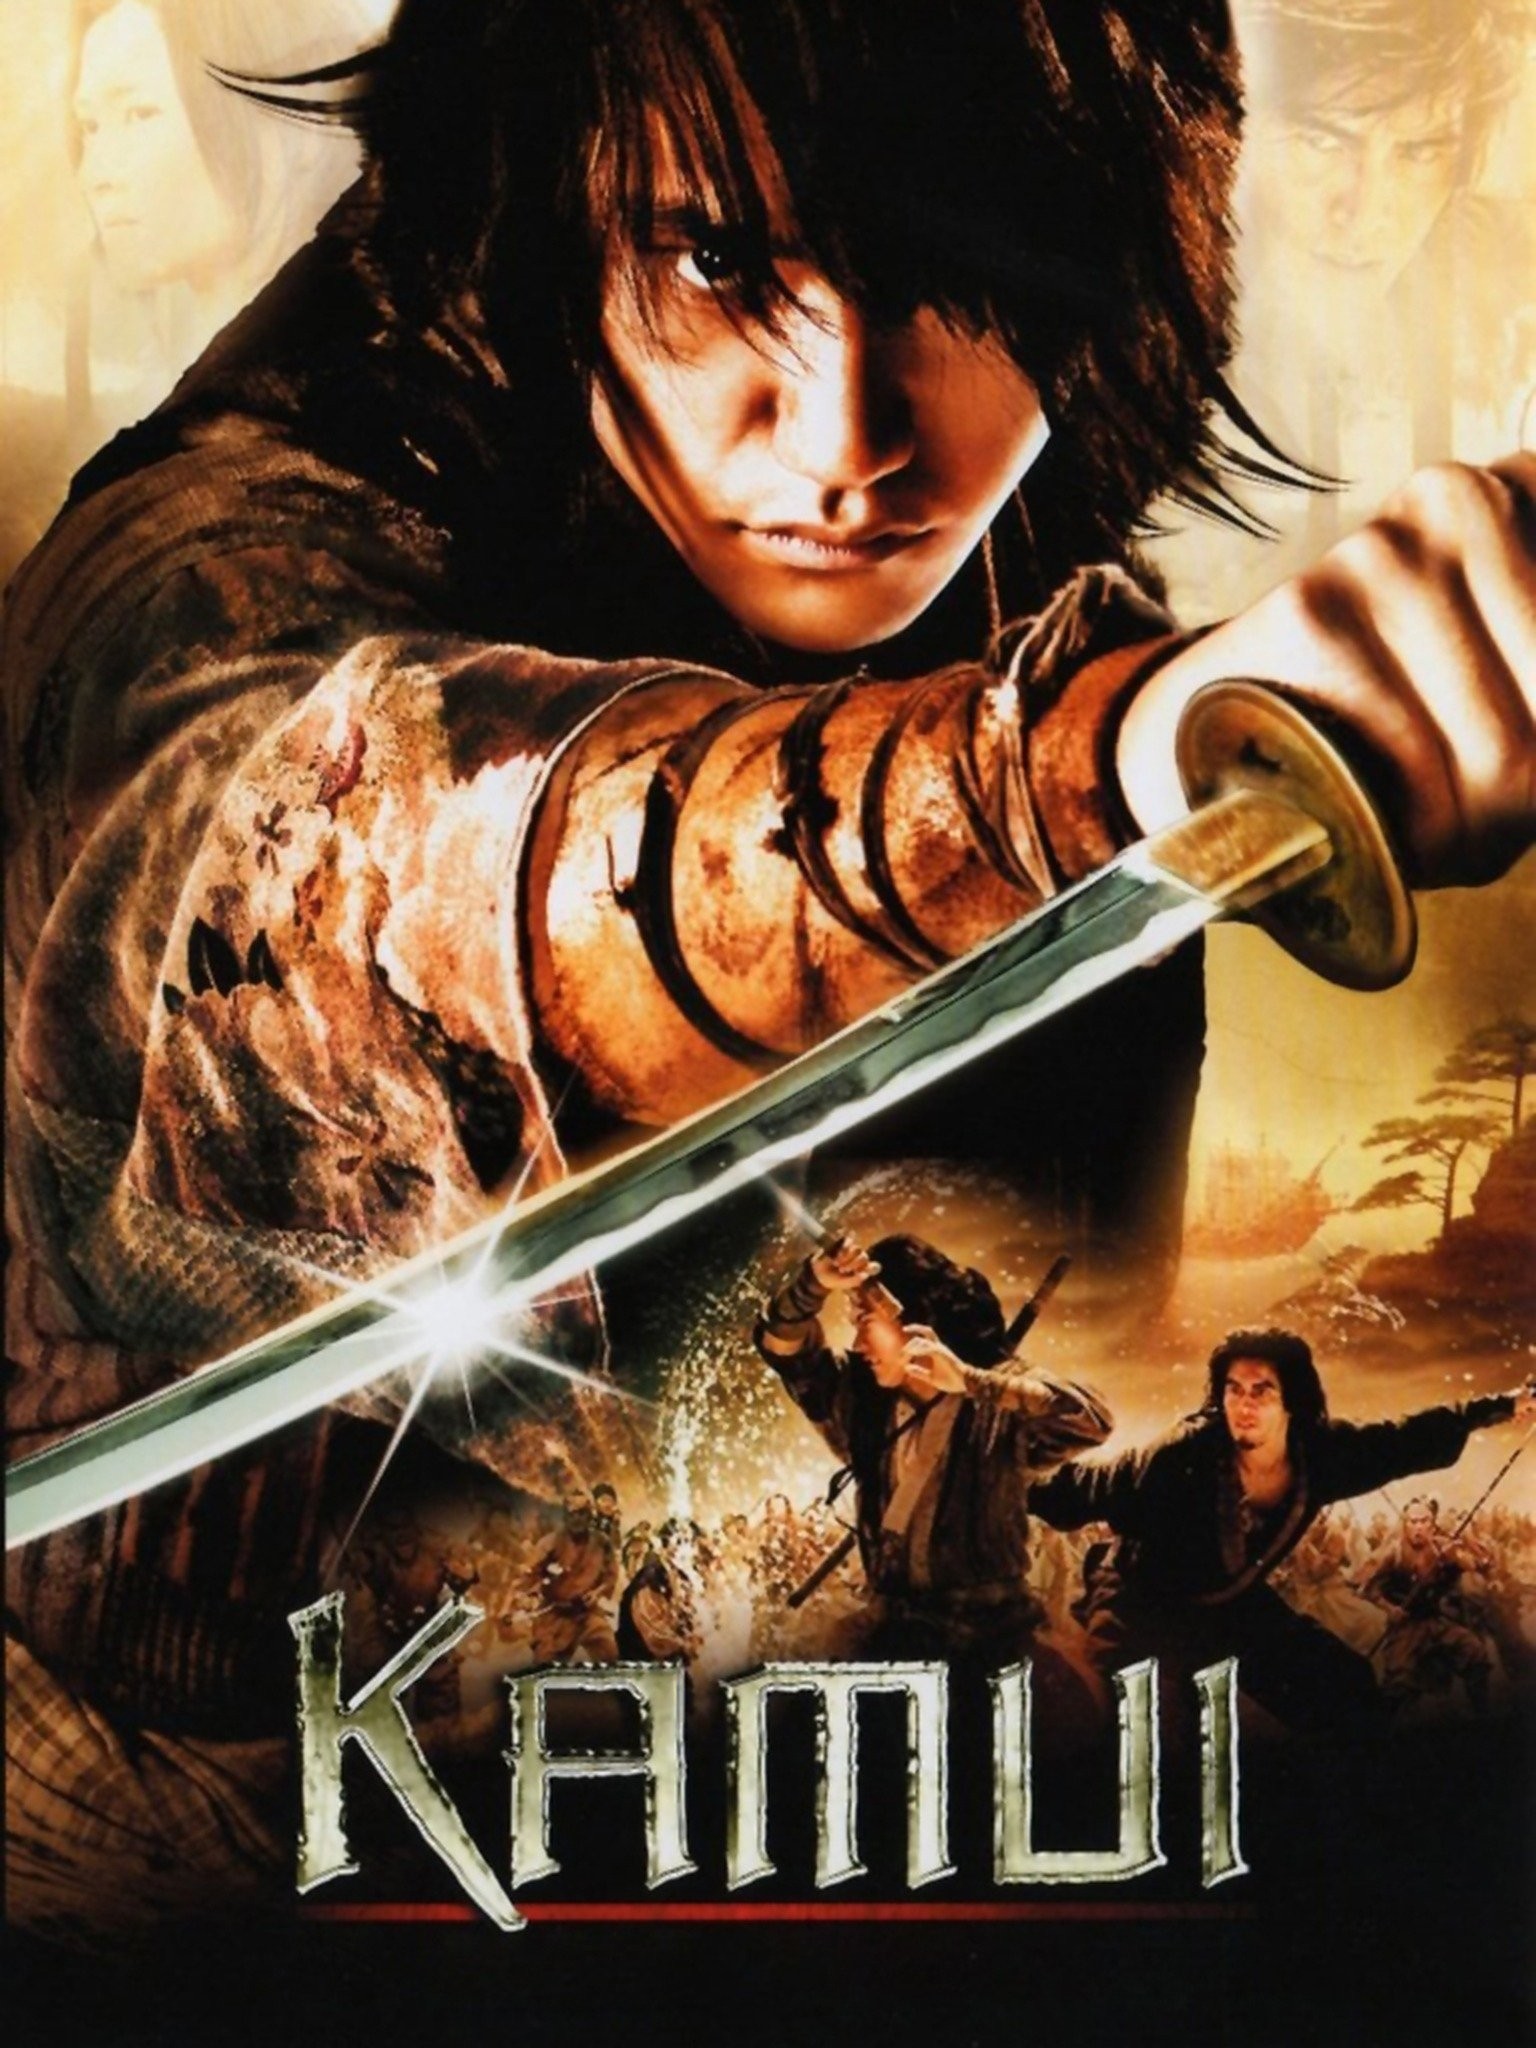 Kamui the Ninja Japanese Movie Streaming Online Watch